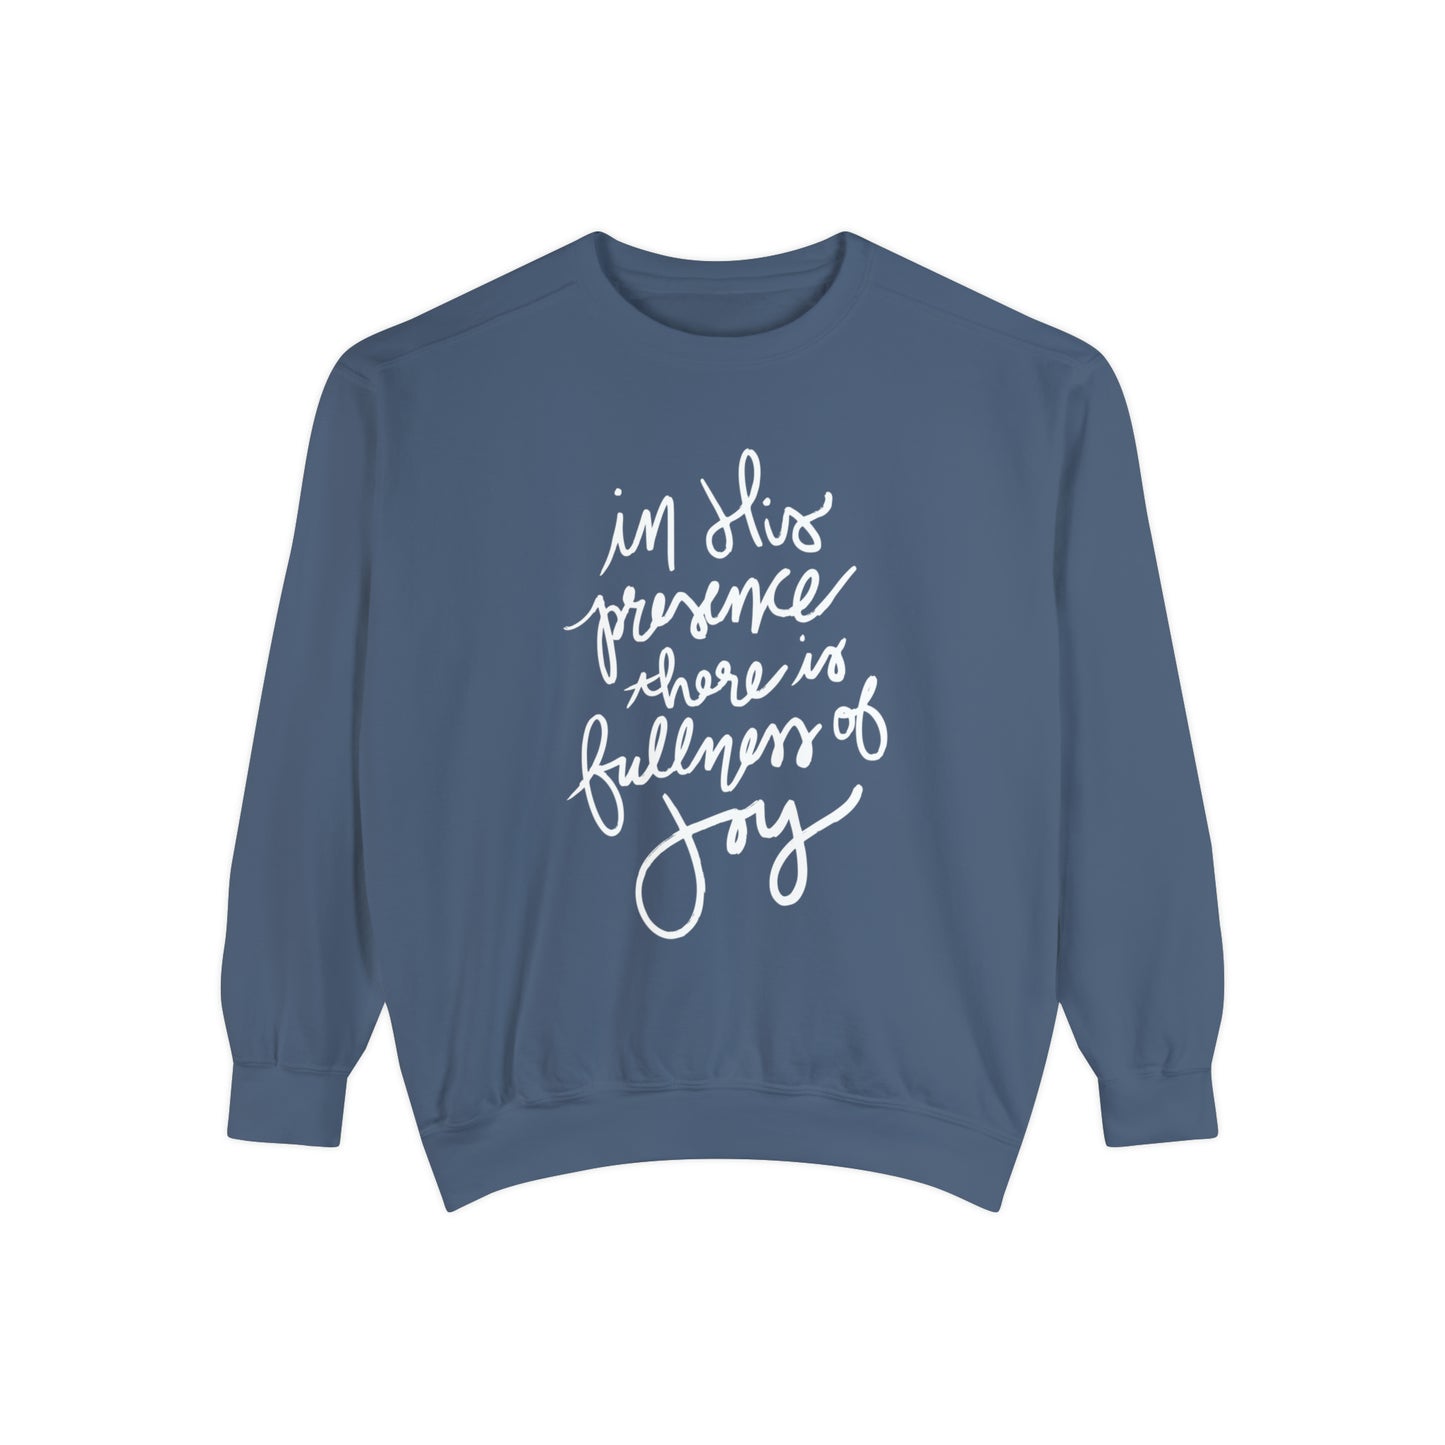 Fullness of Joy Garment-Dyed Sweatshirt